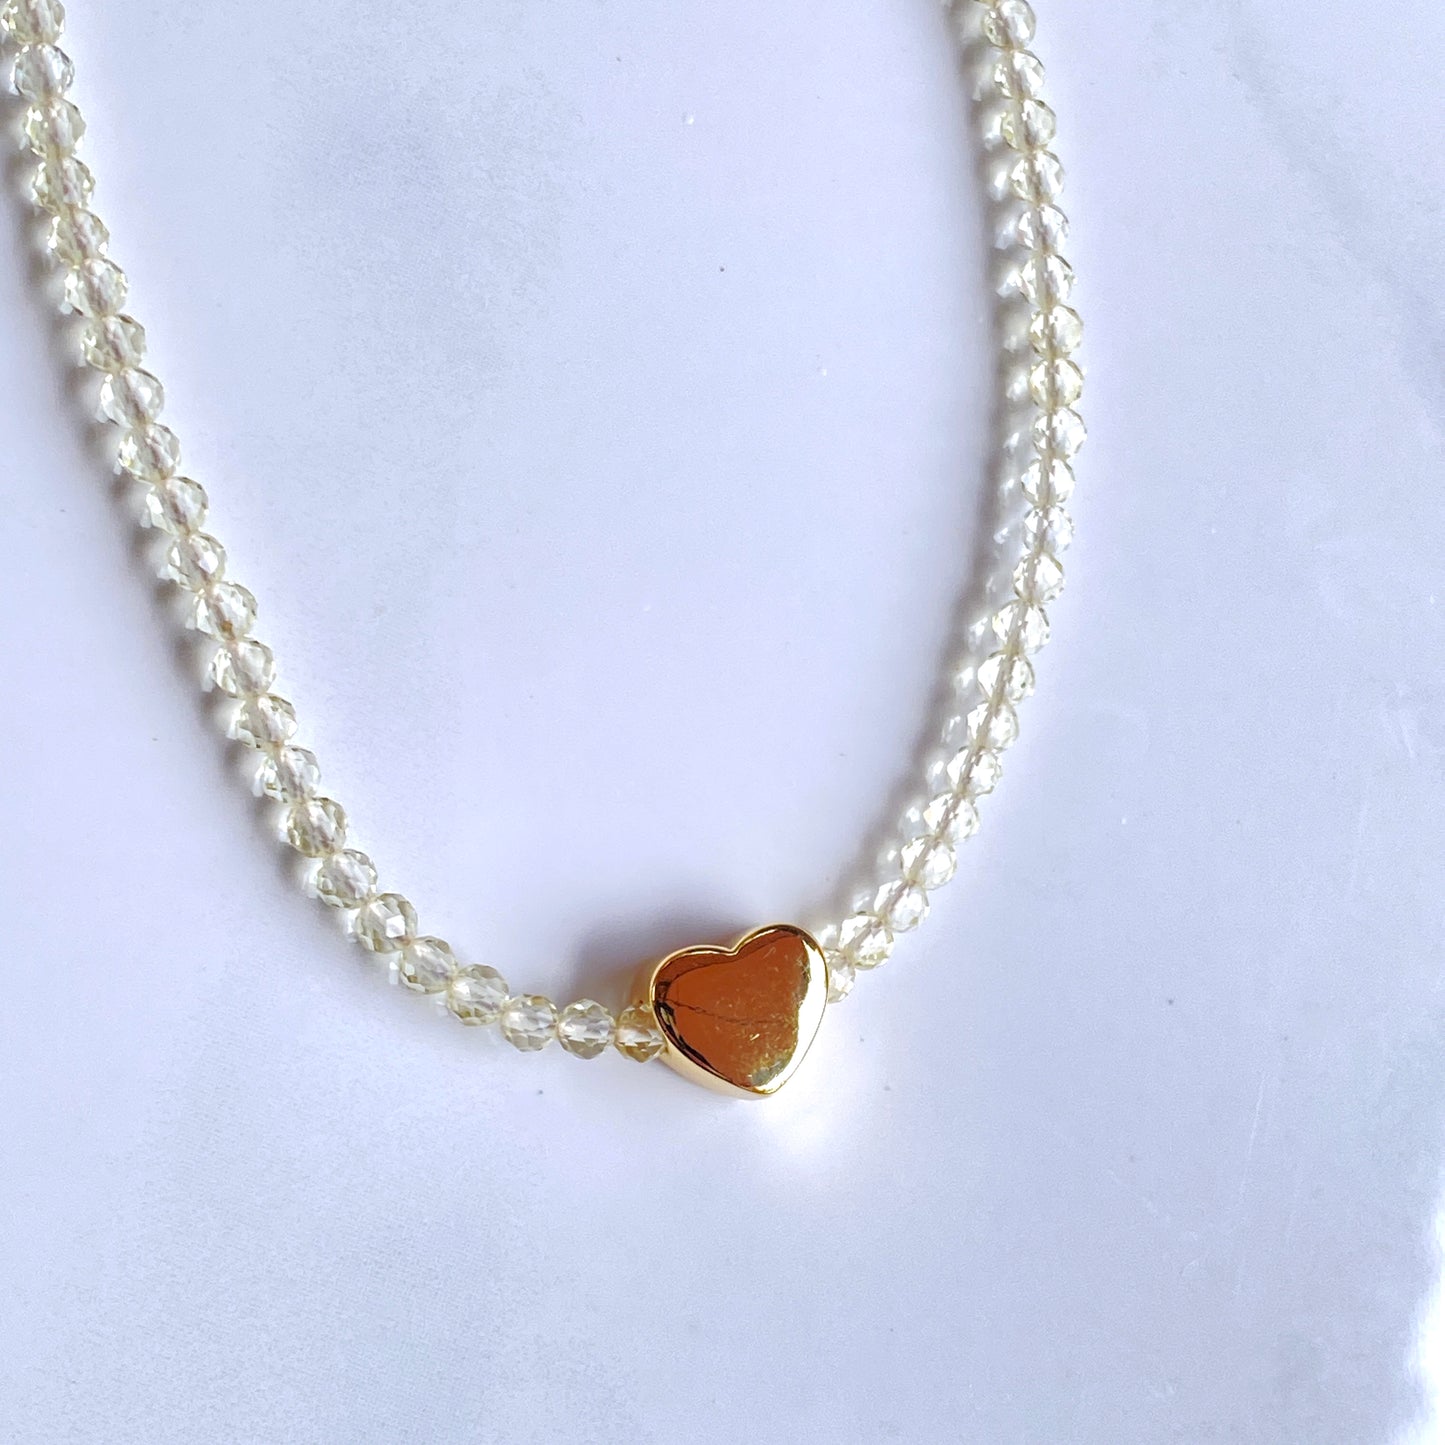 Yellow Topaz gemstone Heart Choker Necklace